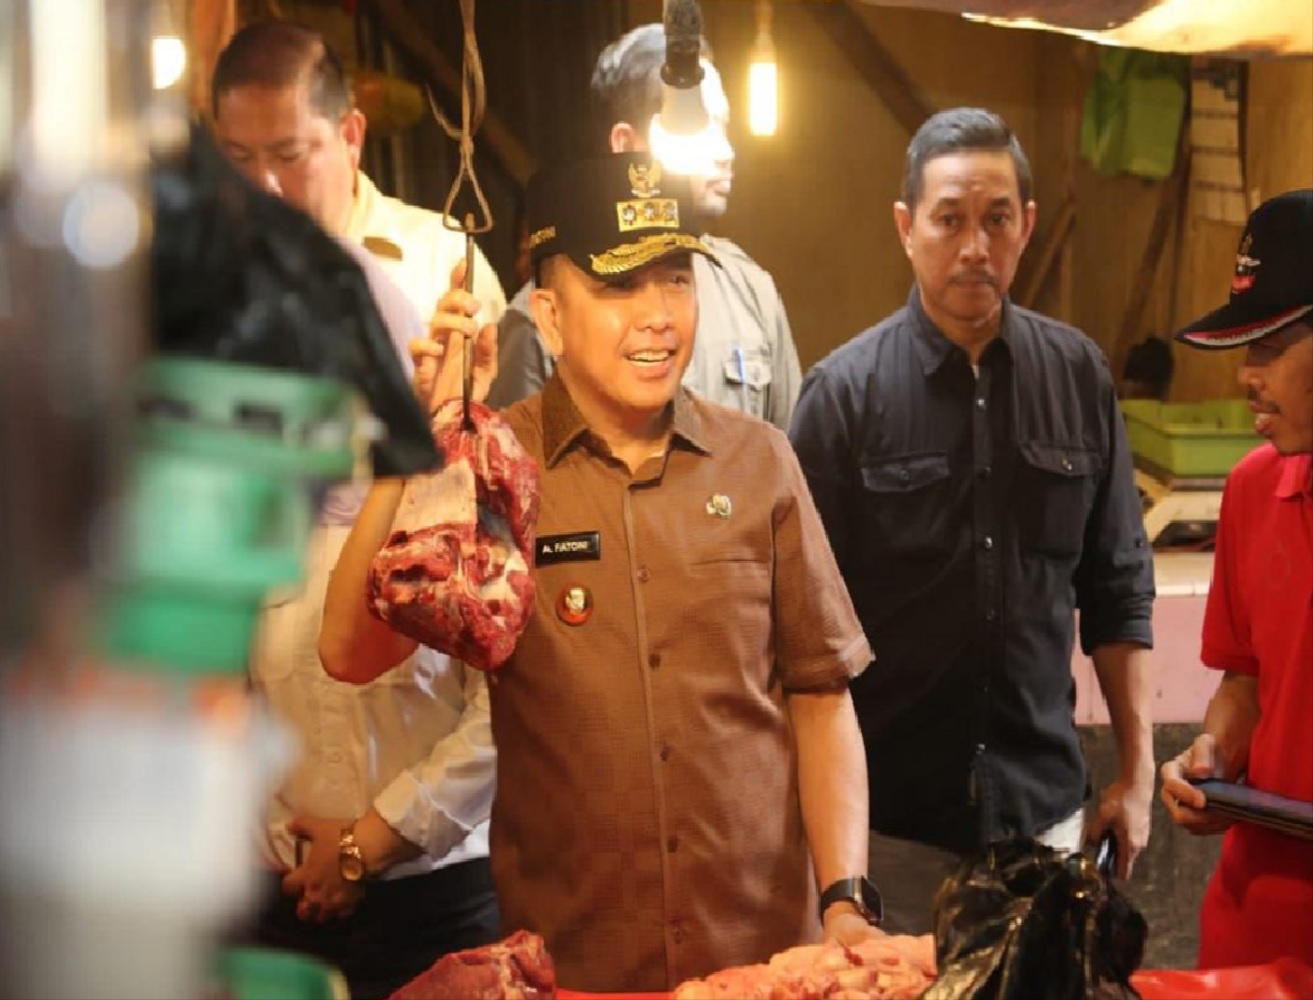 Pj Gubernur Sumsel Agus Fatoni Kunjungi Pasar Tradisional Cek Harga Bahan Pokok